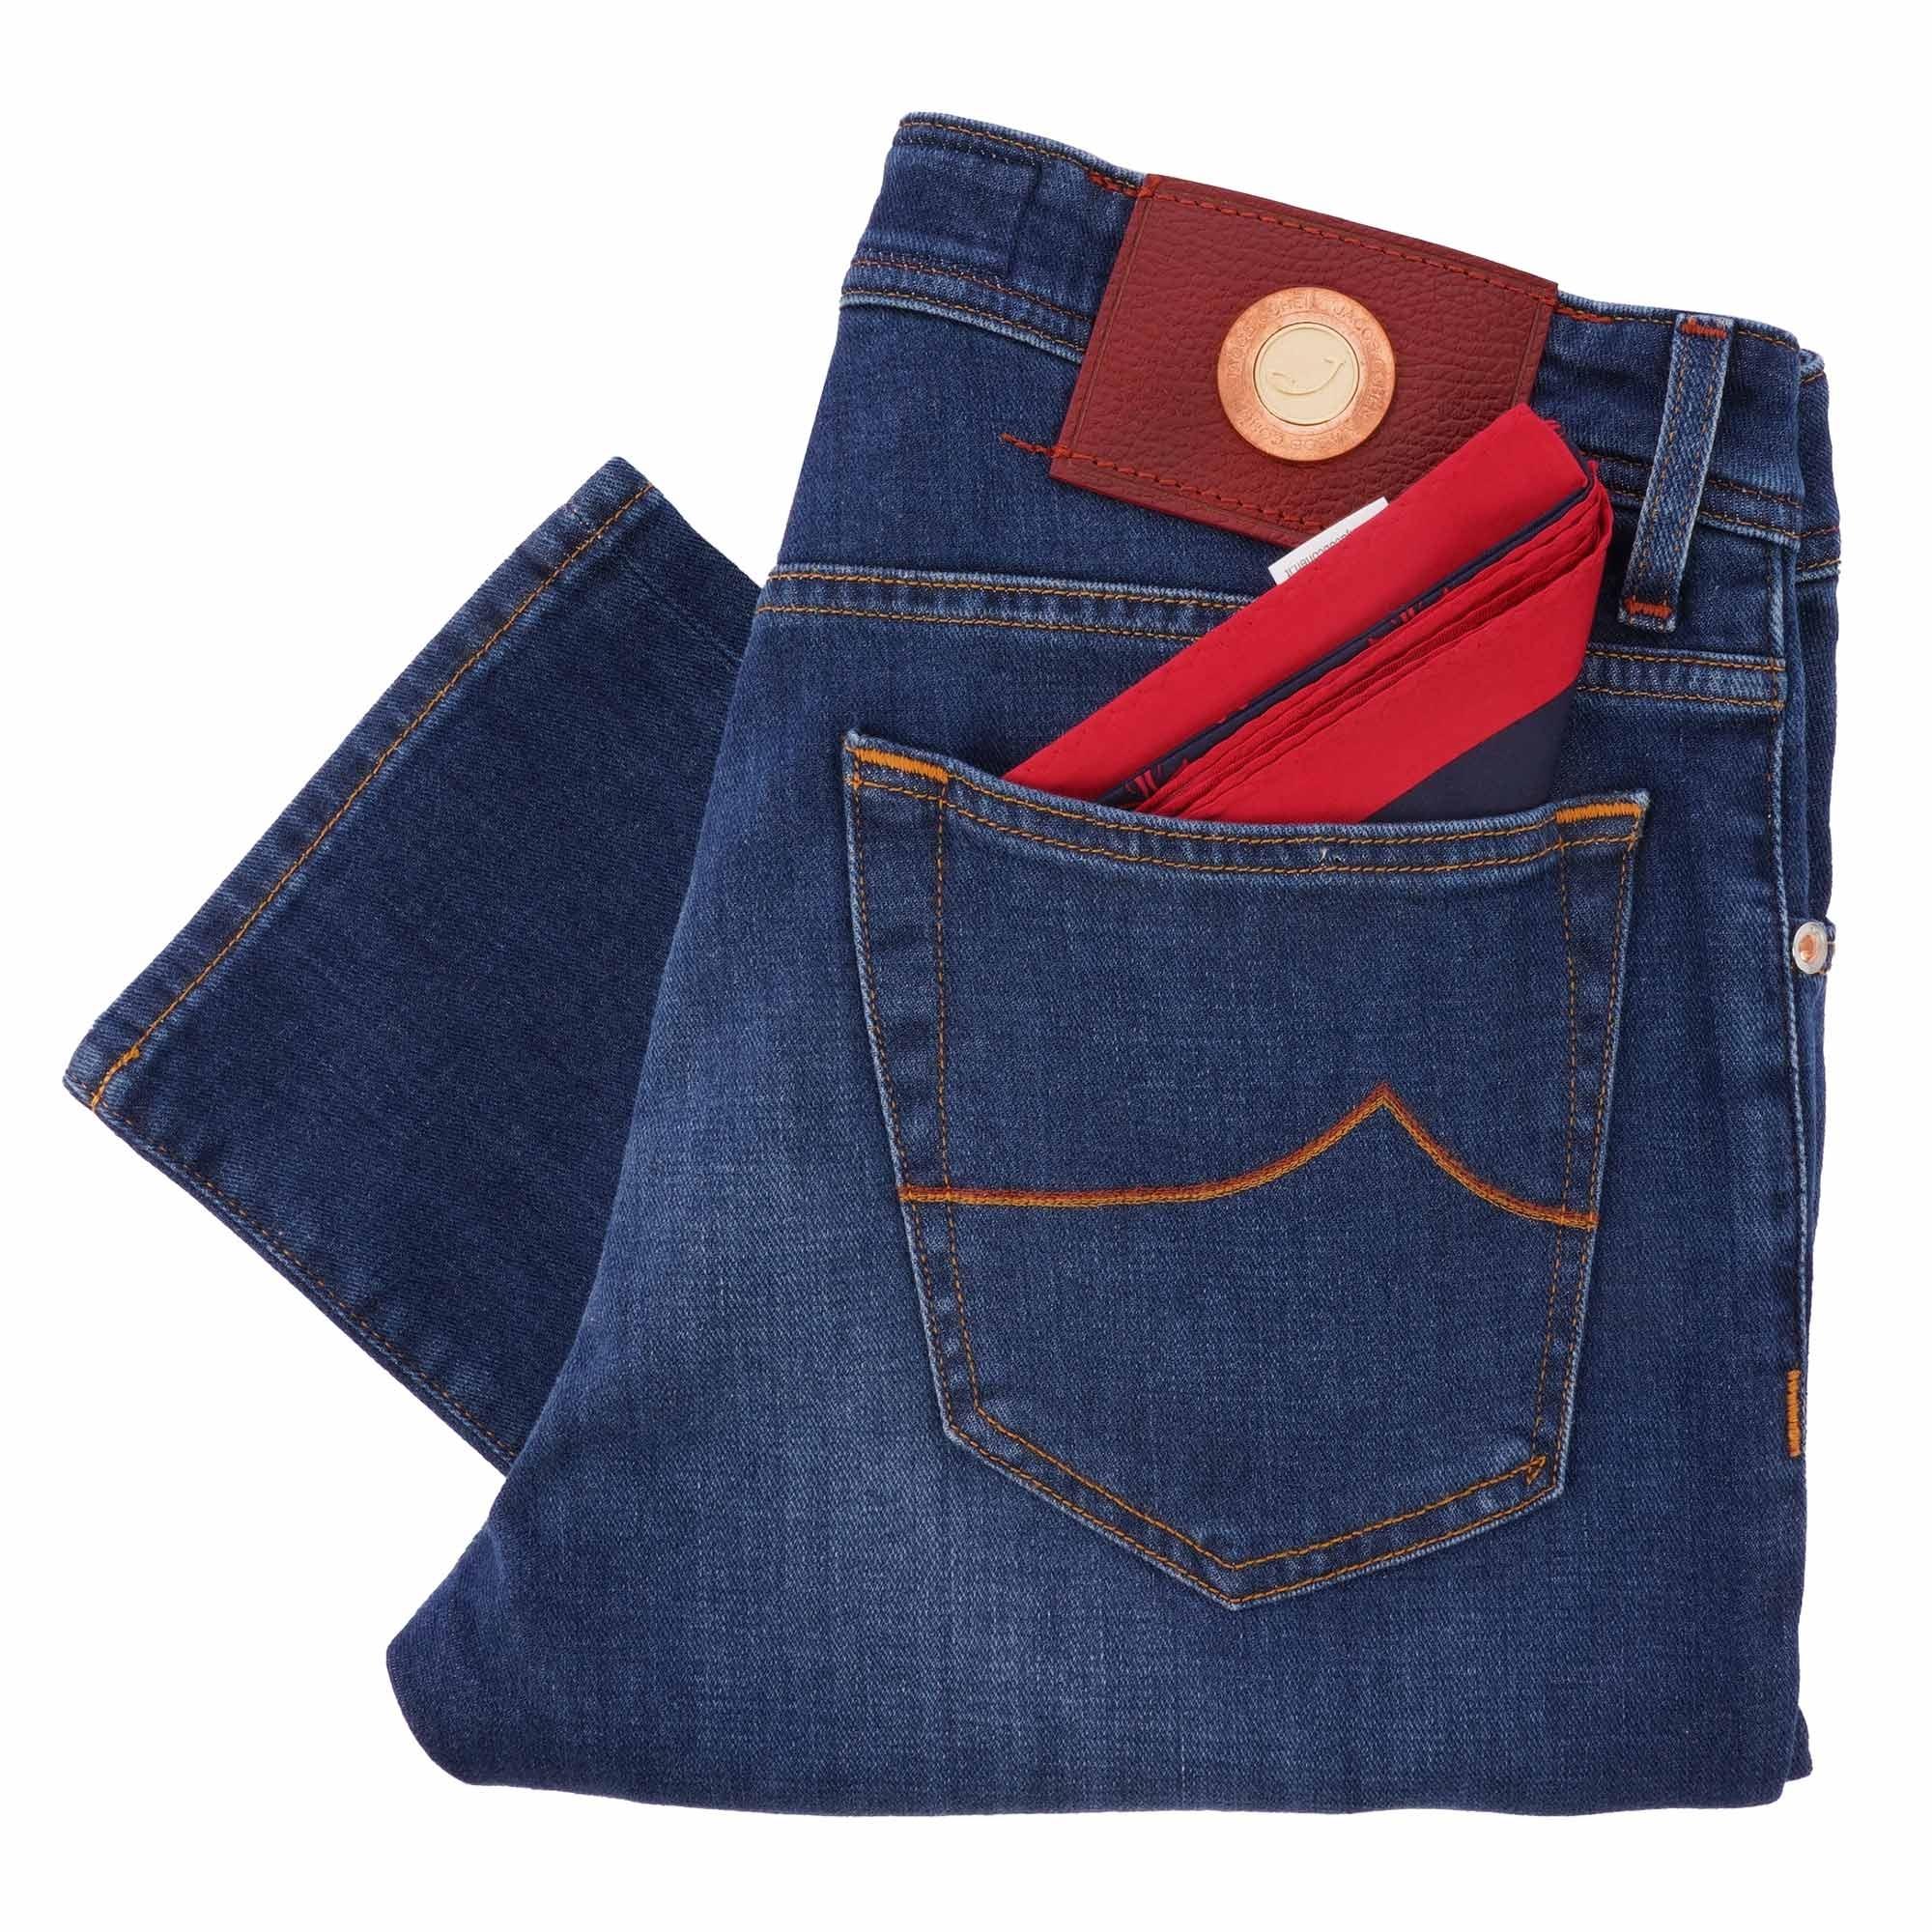 Jacob Cohen Denim Limited Edition J688 Comfort Jeans in Denim (Blue) for  Men - Lyst